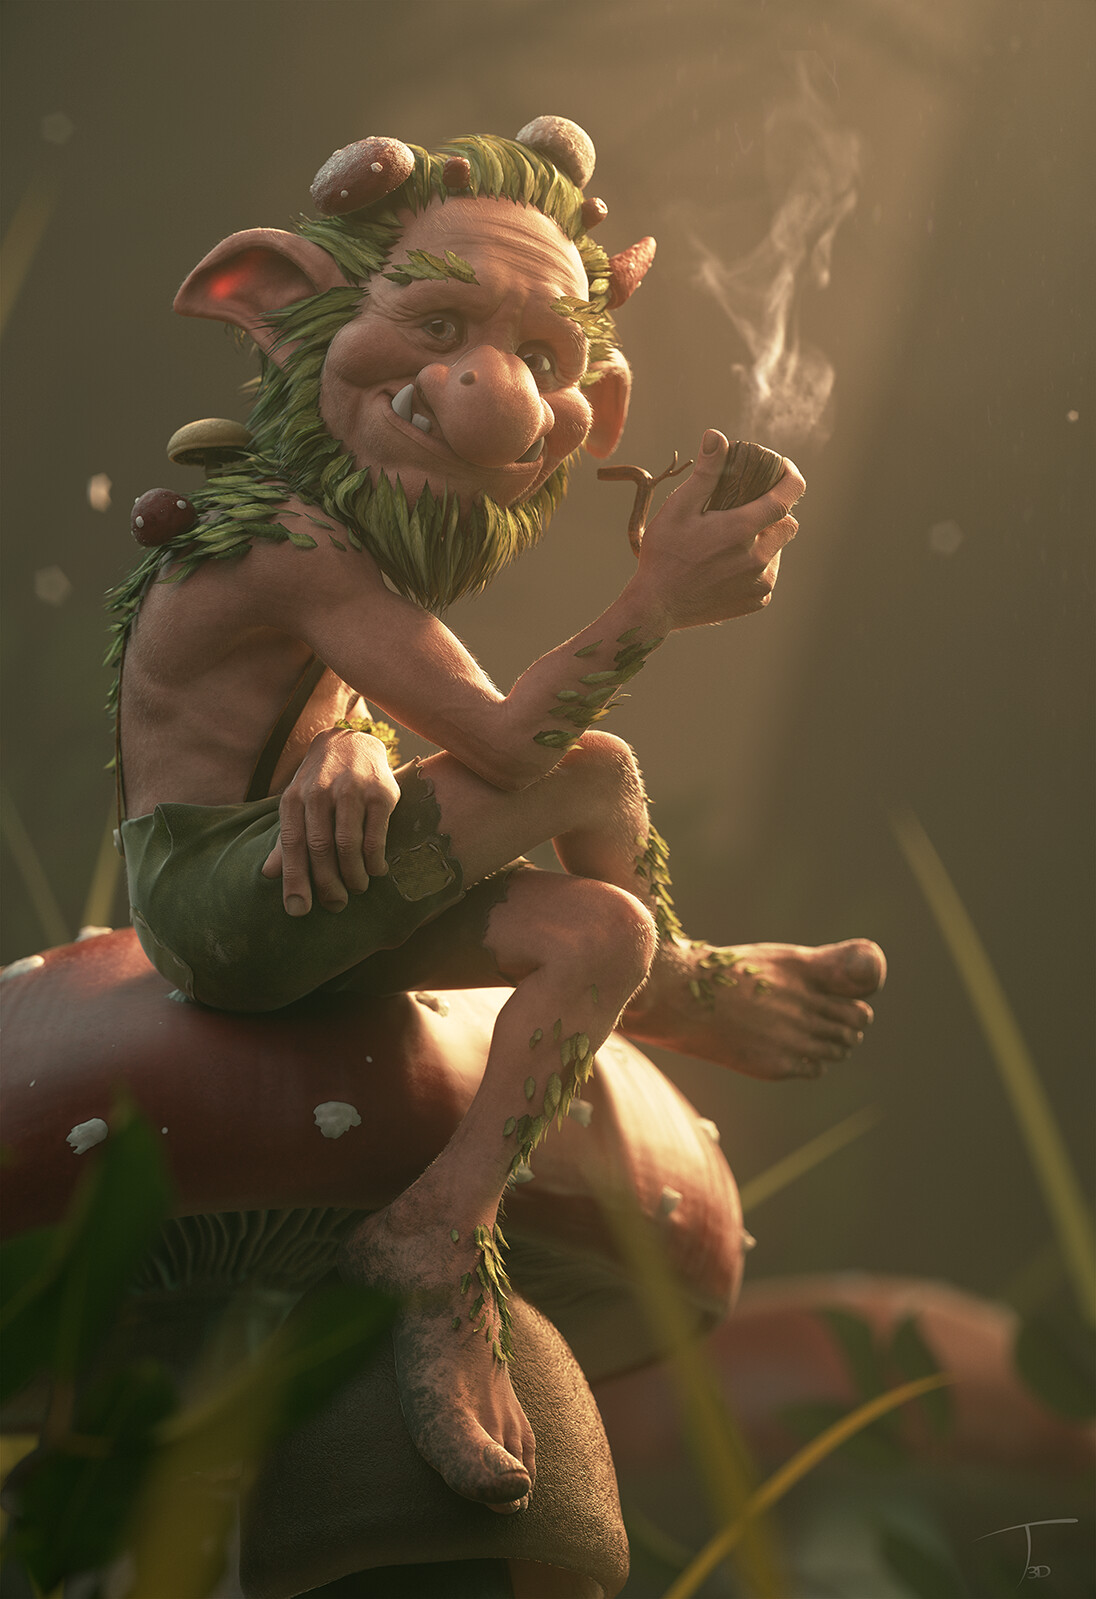 Forest troll